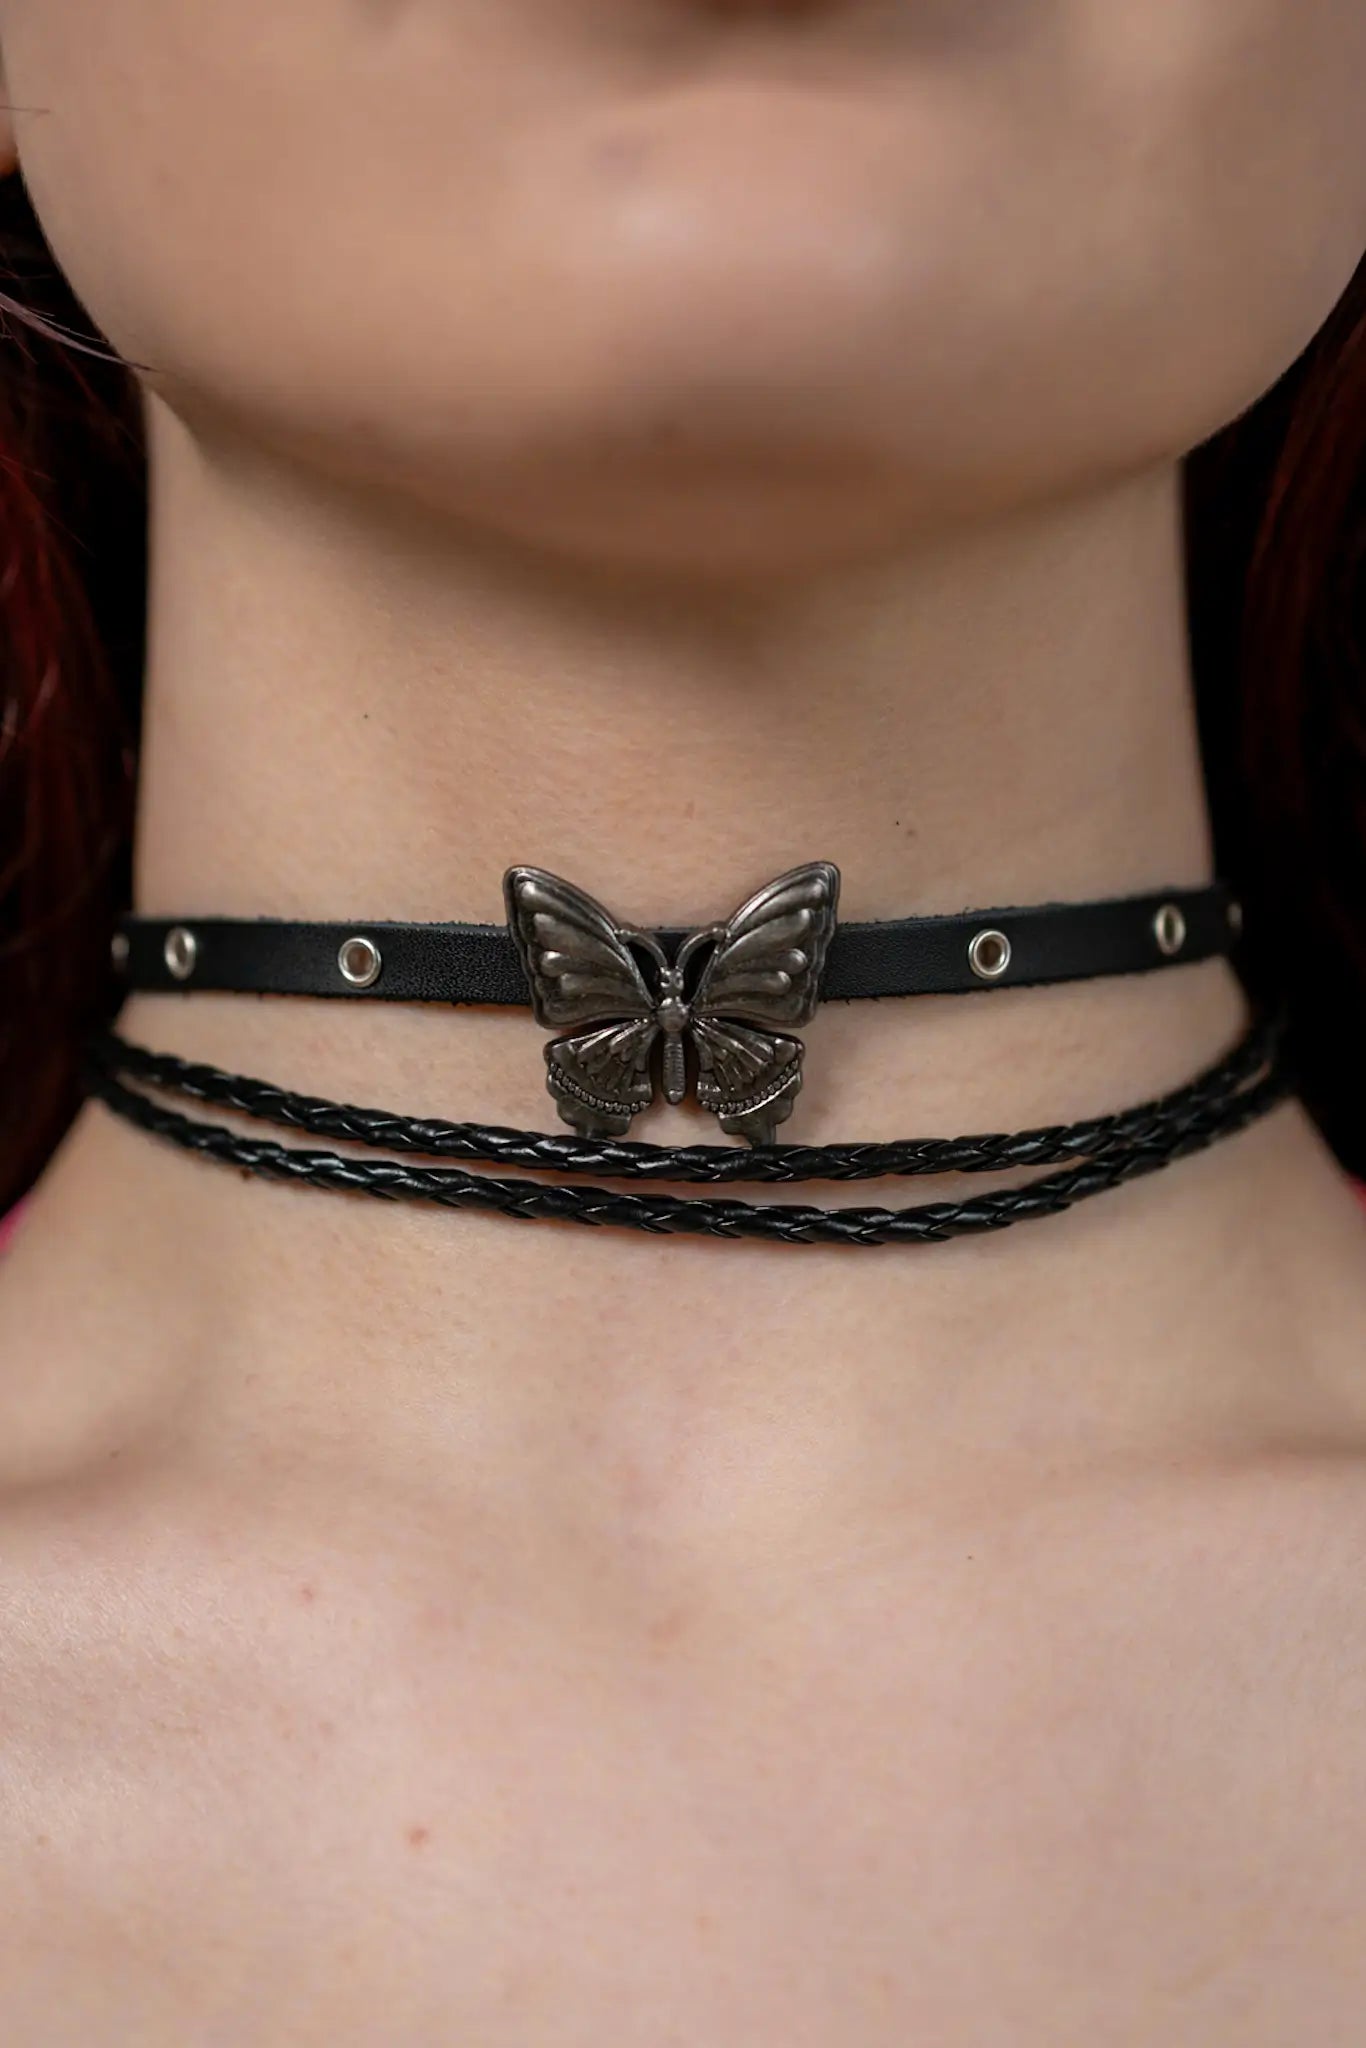 Butterfly Chain: Butterfly Chain